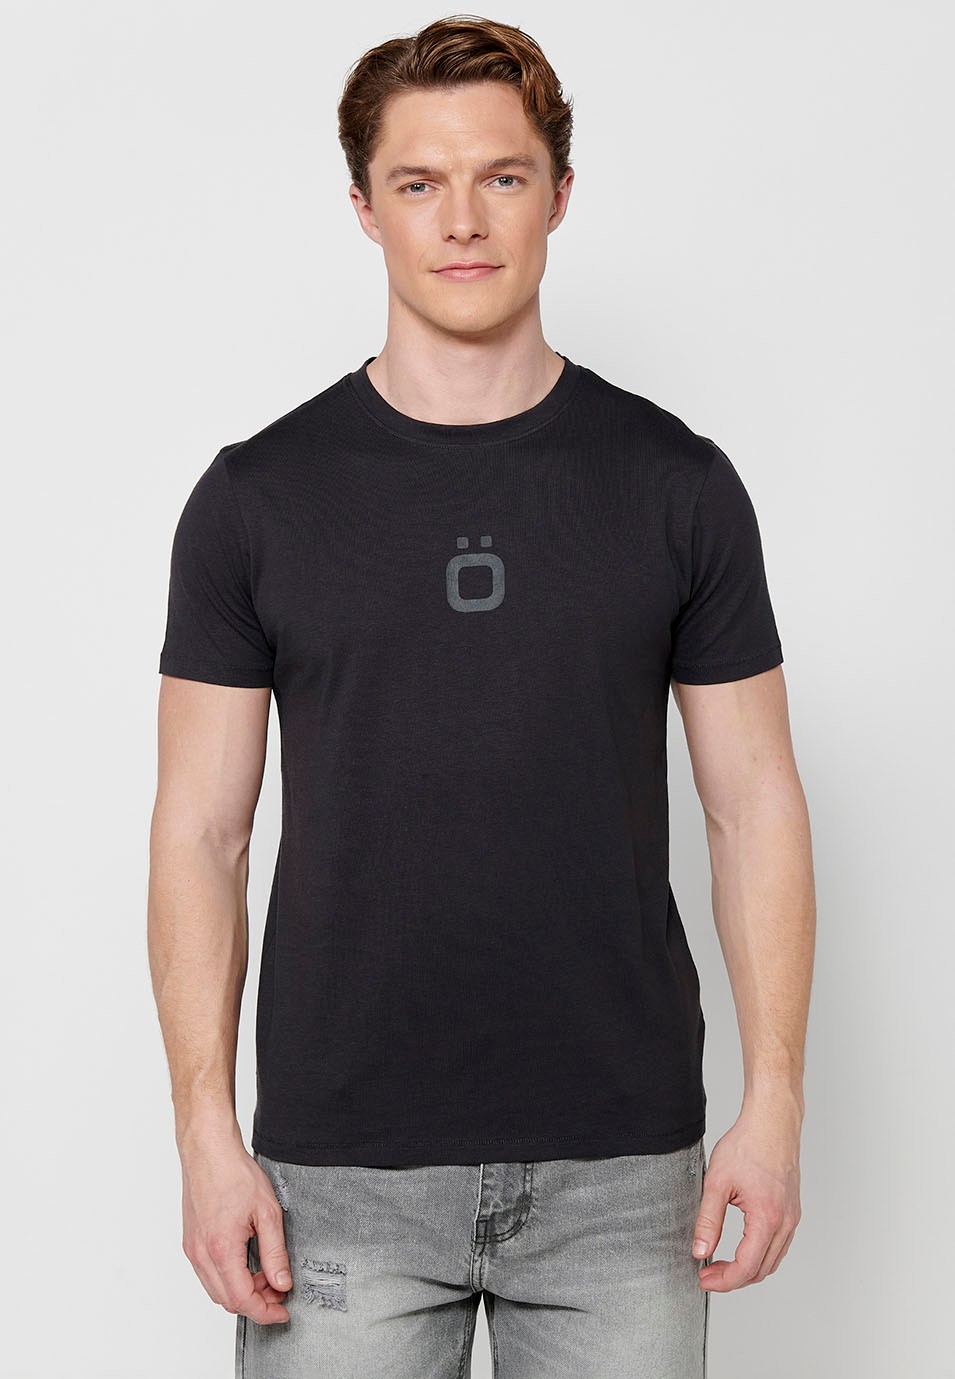 Camiseta de manga corta cuello redondo logo frontal color negro para hombre